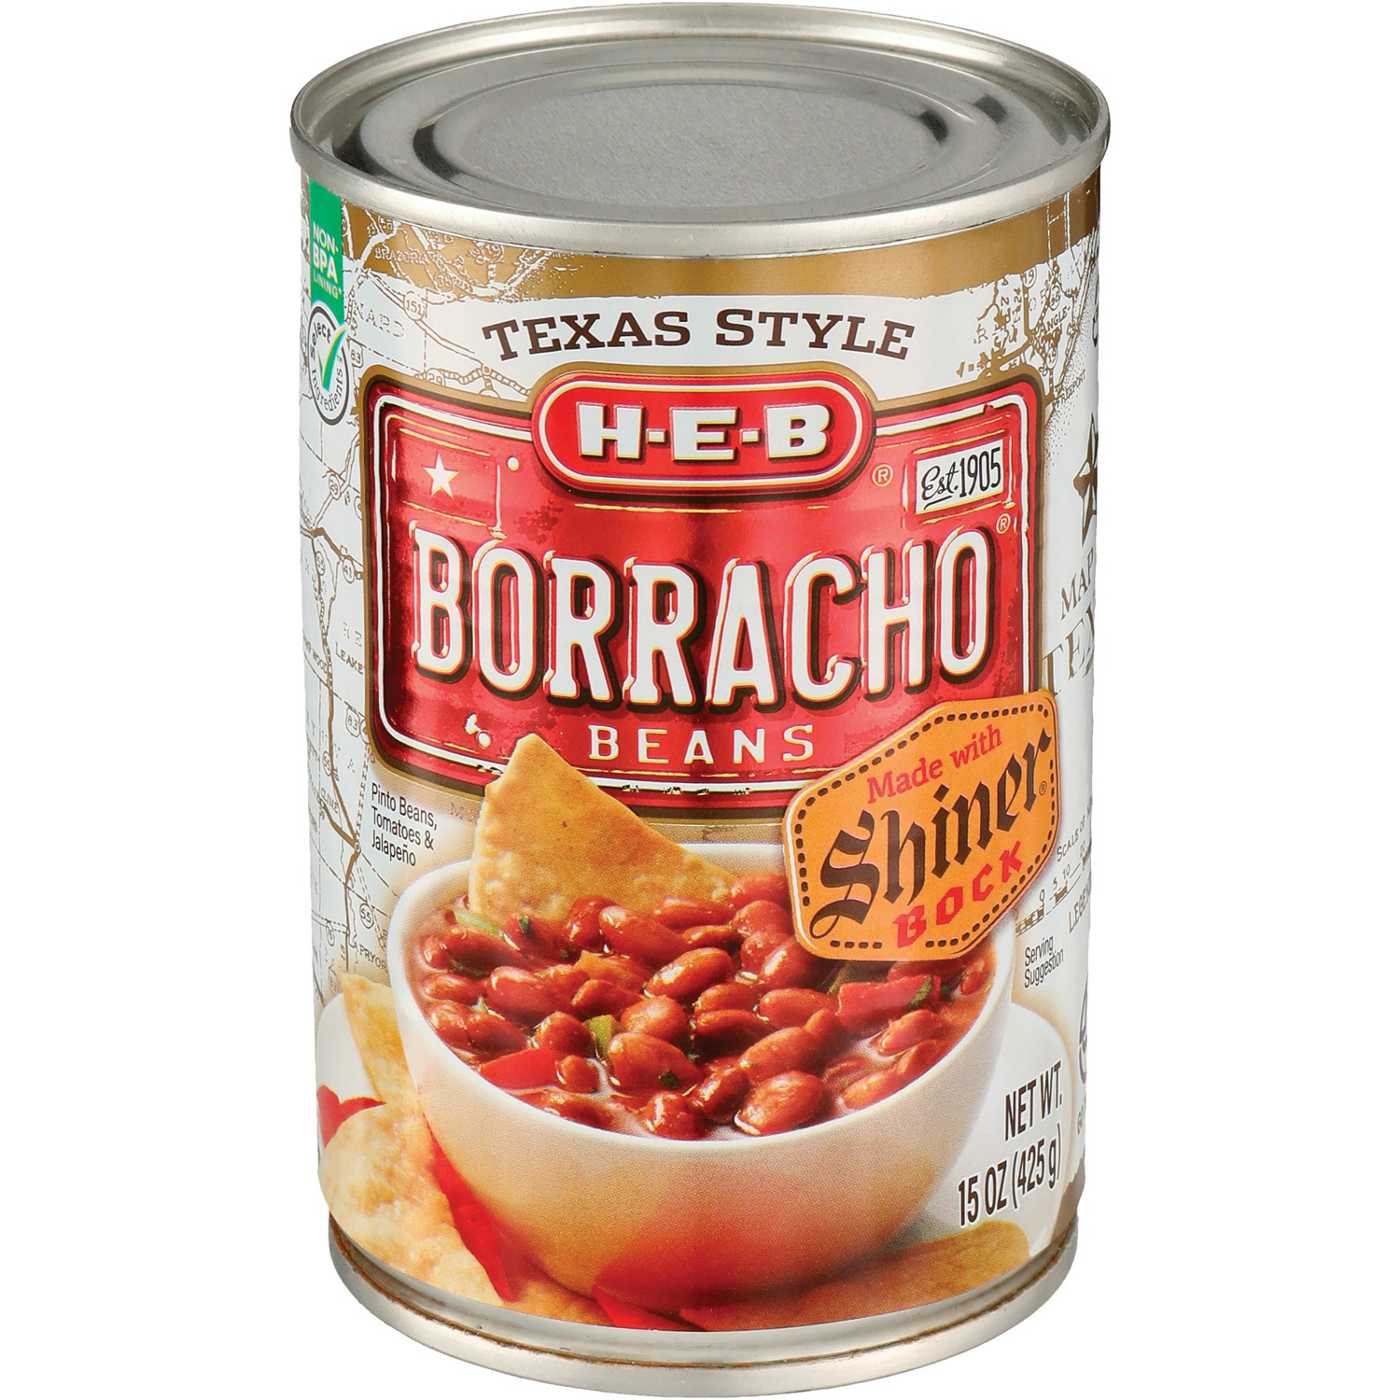 H-E-B Borracho Beans with Shiner Bock; image 1 of 2